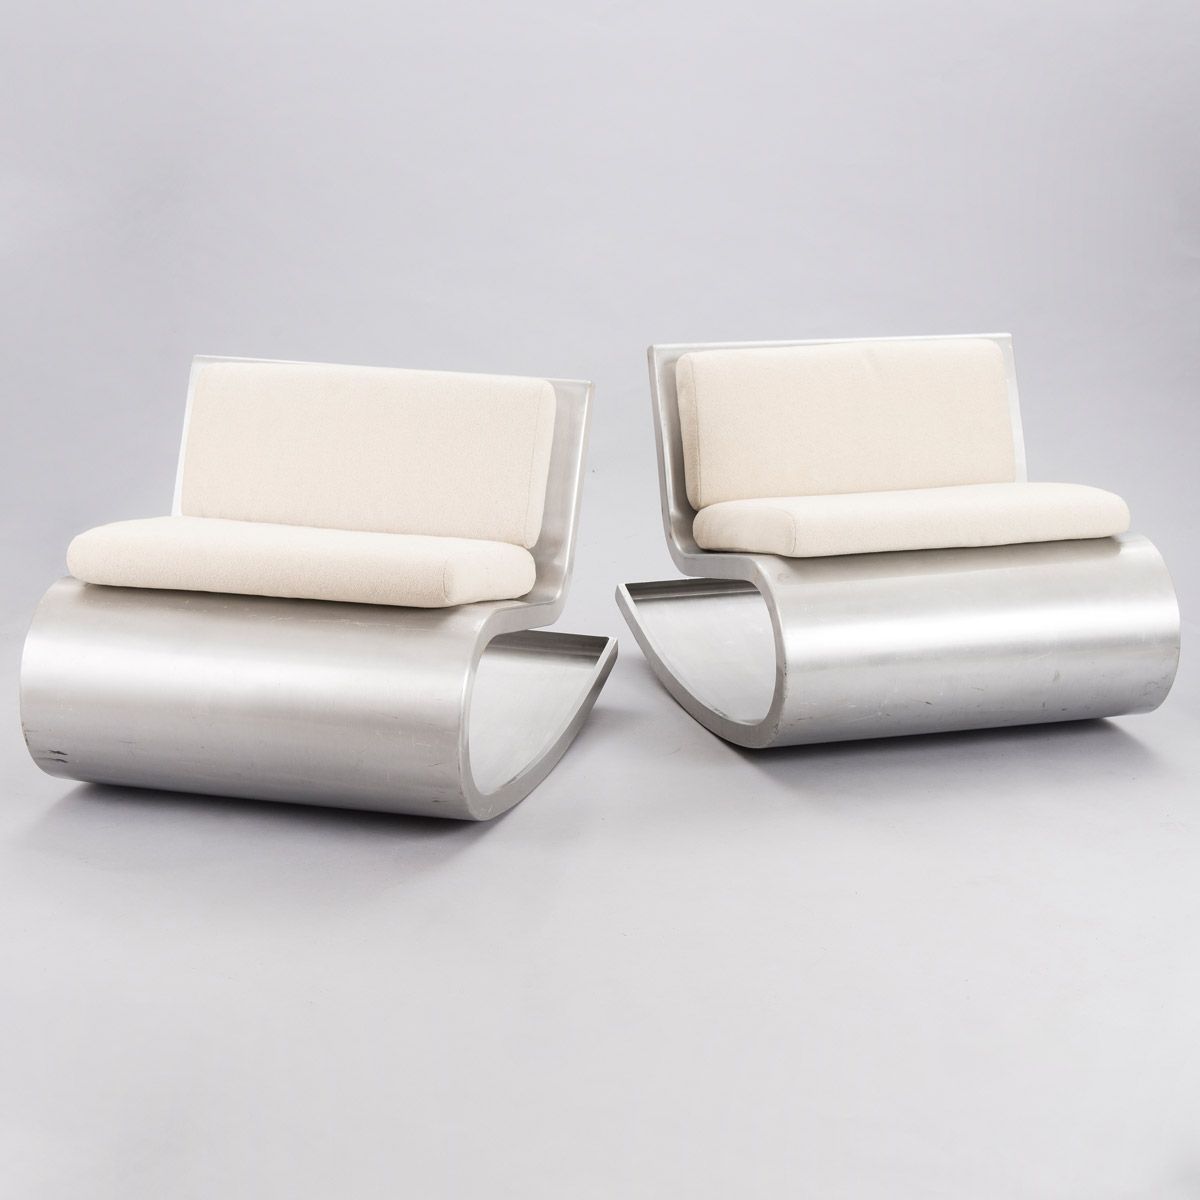 Aluminum chairs with cushions by Petra Majantie ja Siri Viherheimo.